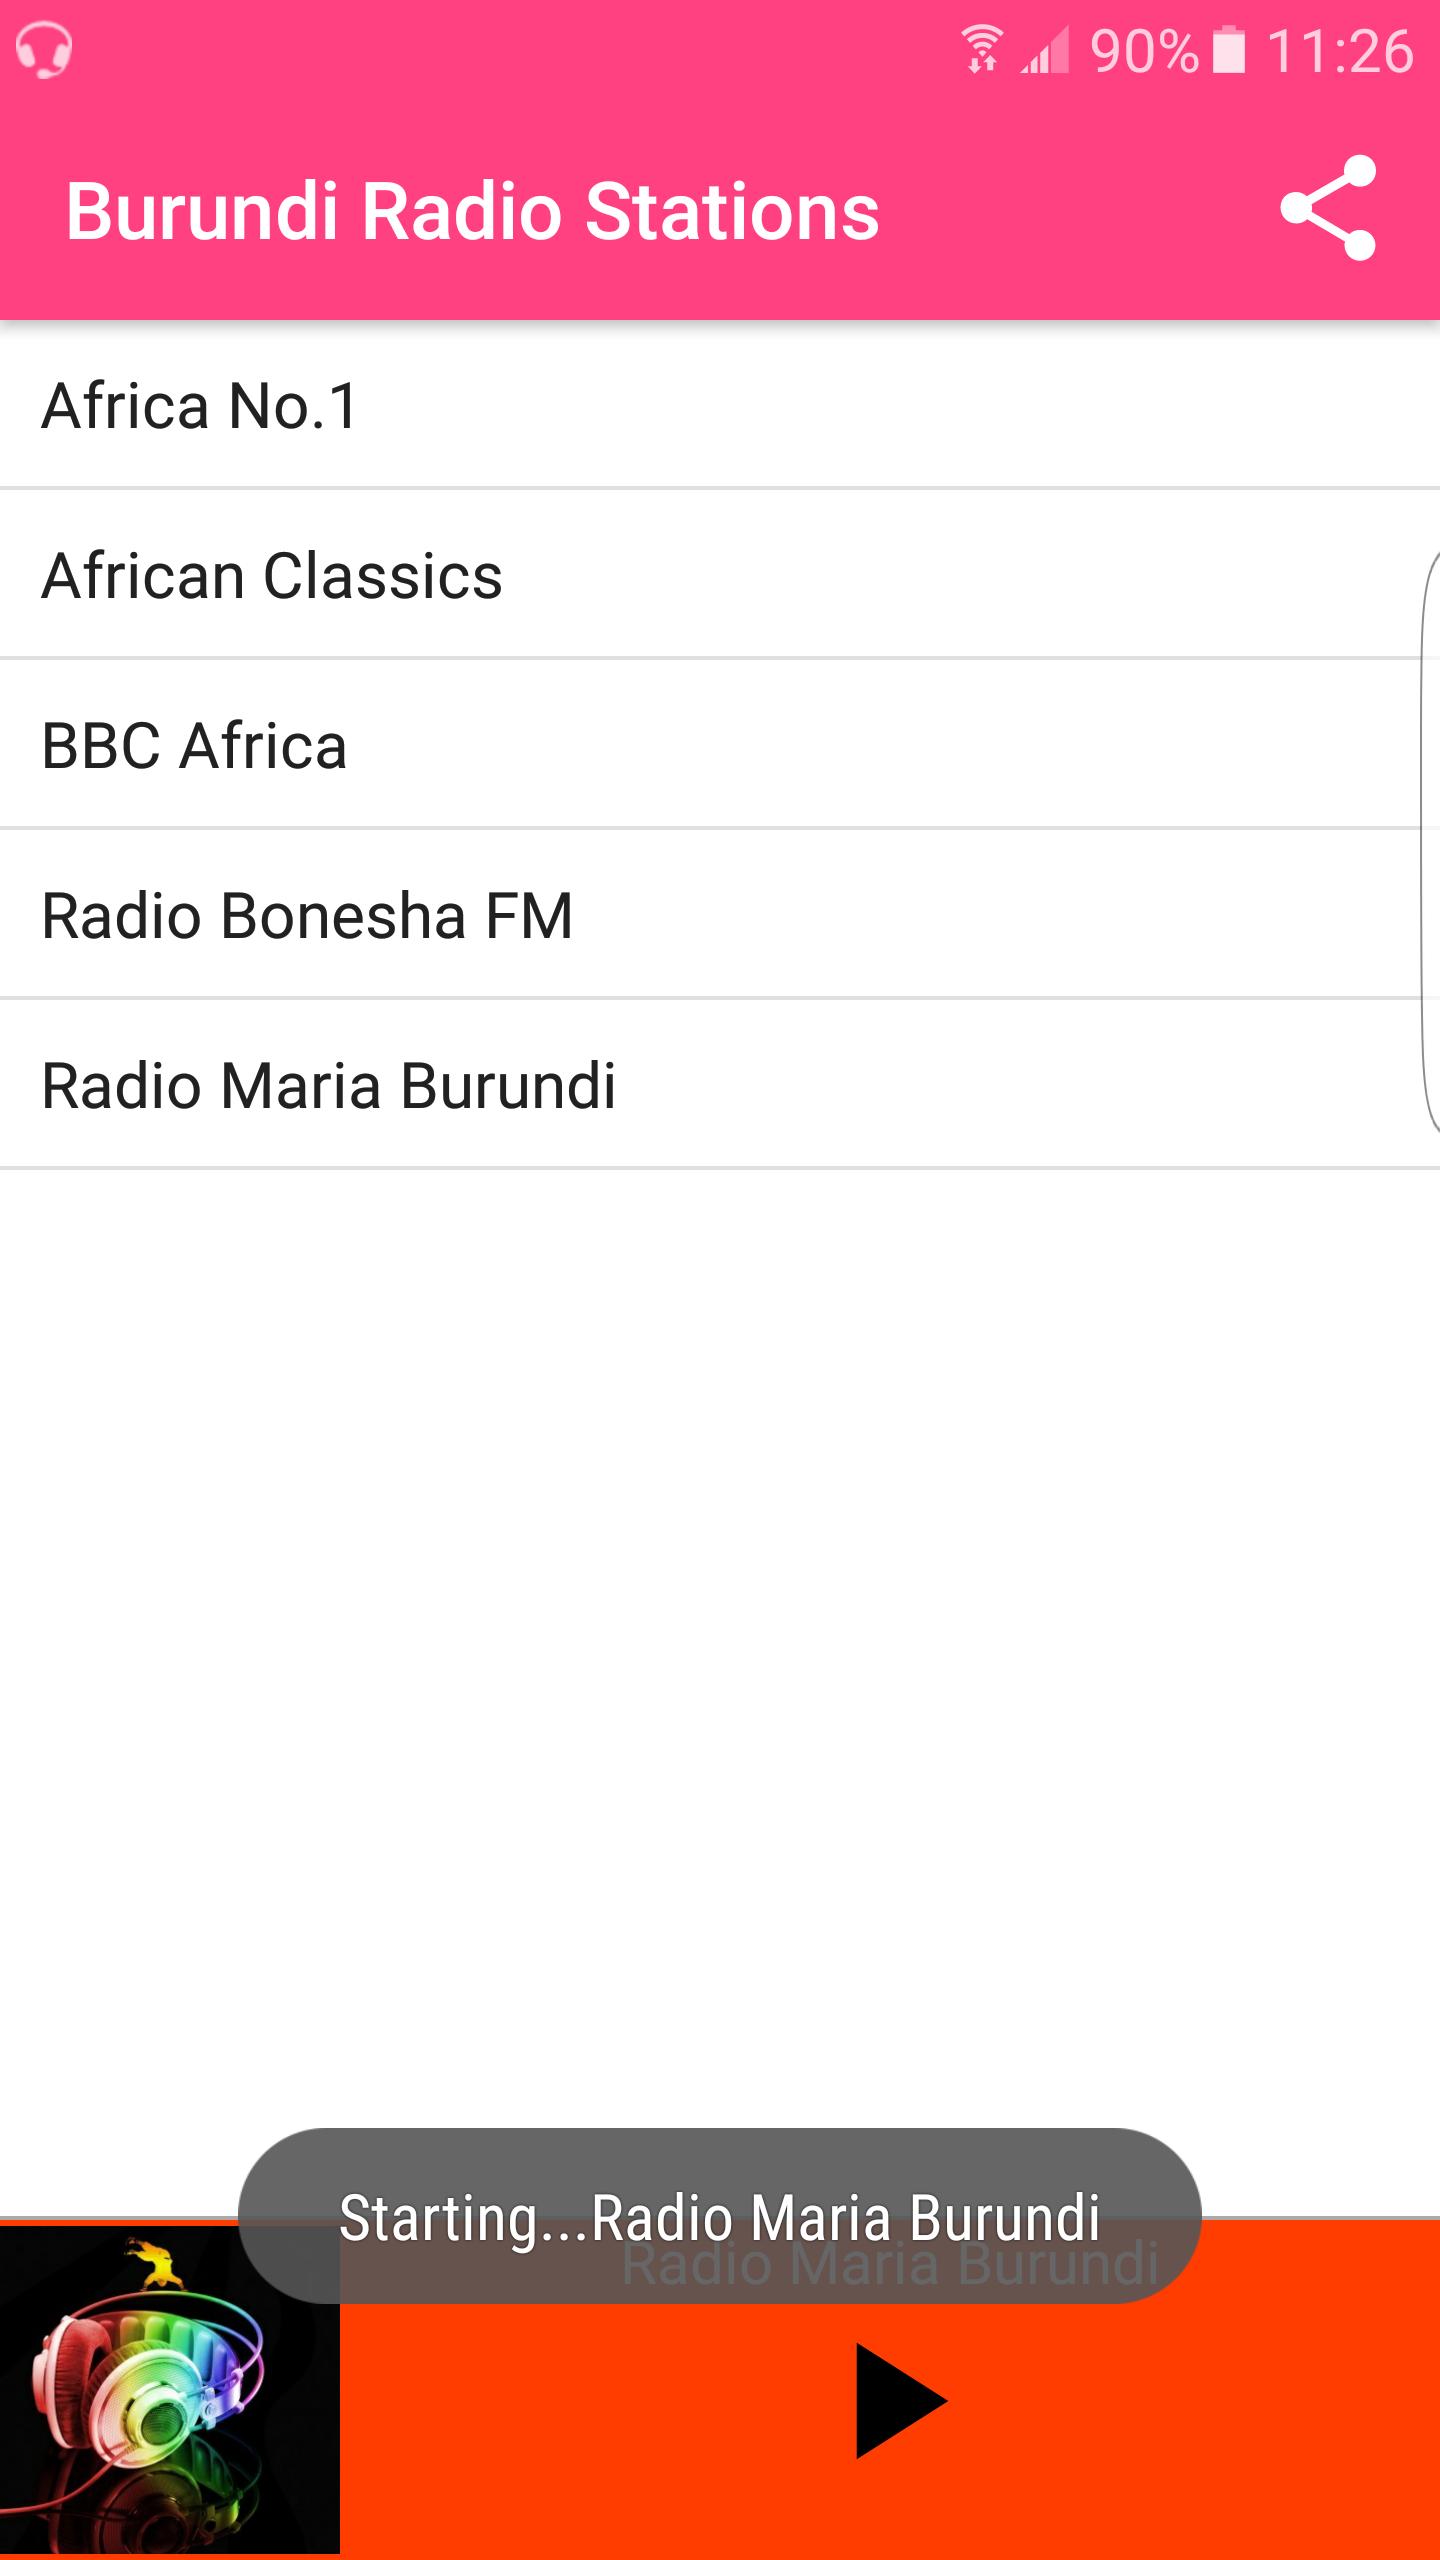 Burundi Radio Stations APK for Android Download